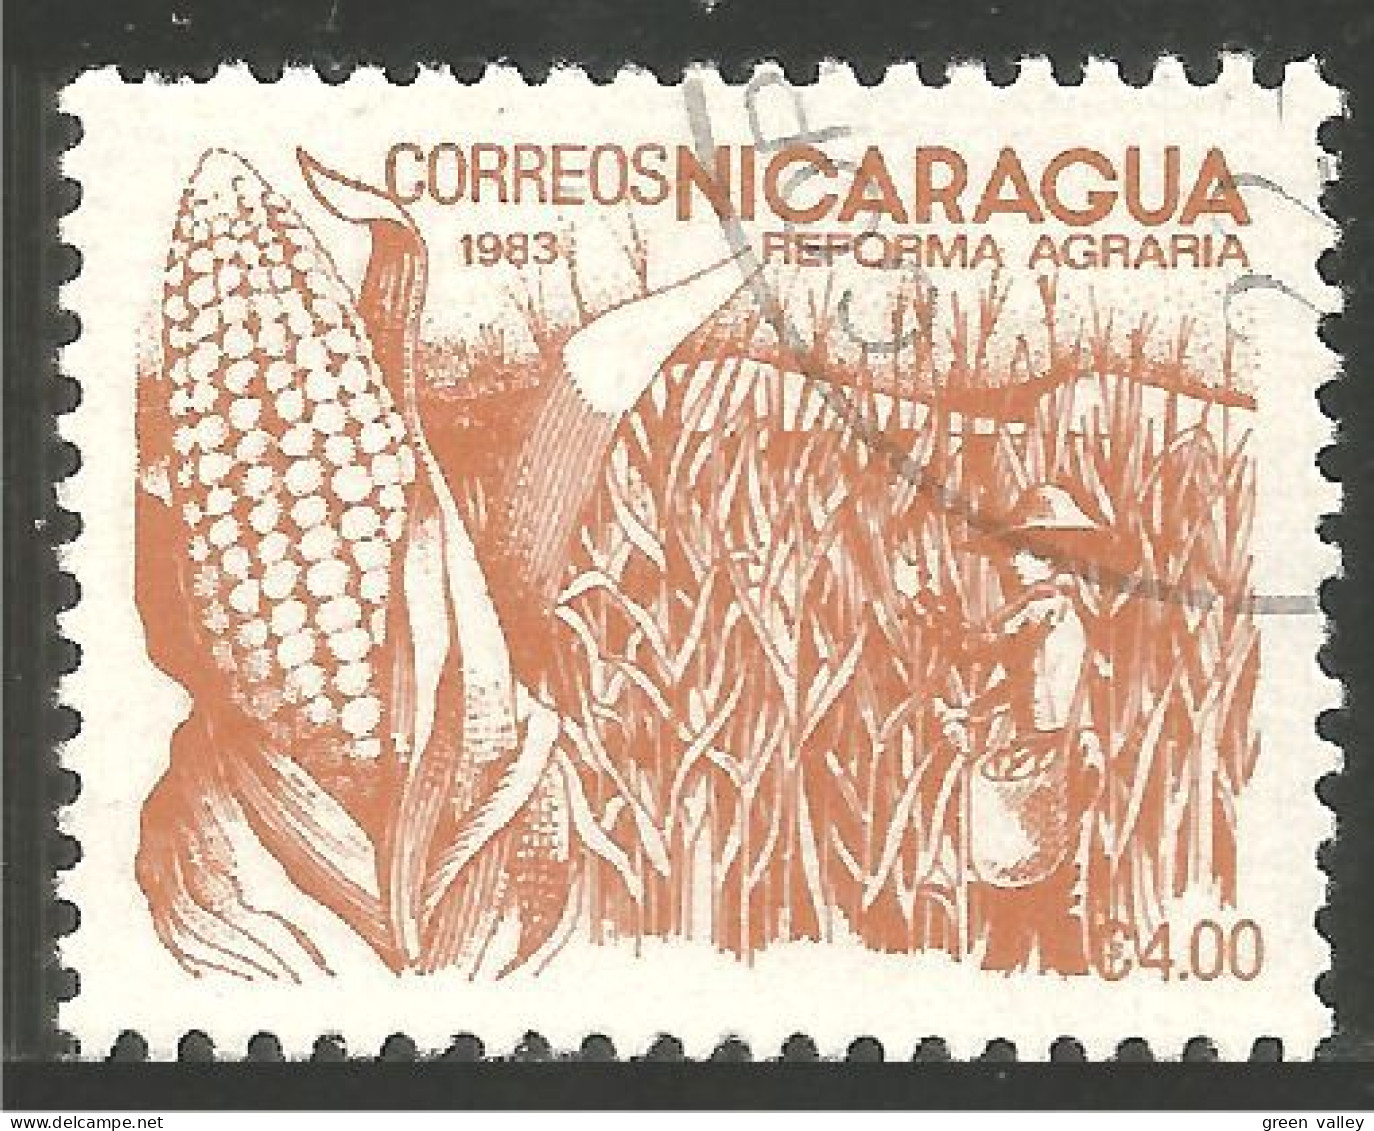 684 Nicaragua Mais Corn Mai Maize Maïs (NIC-478a) - Agricoltura